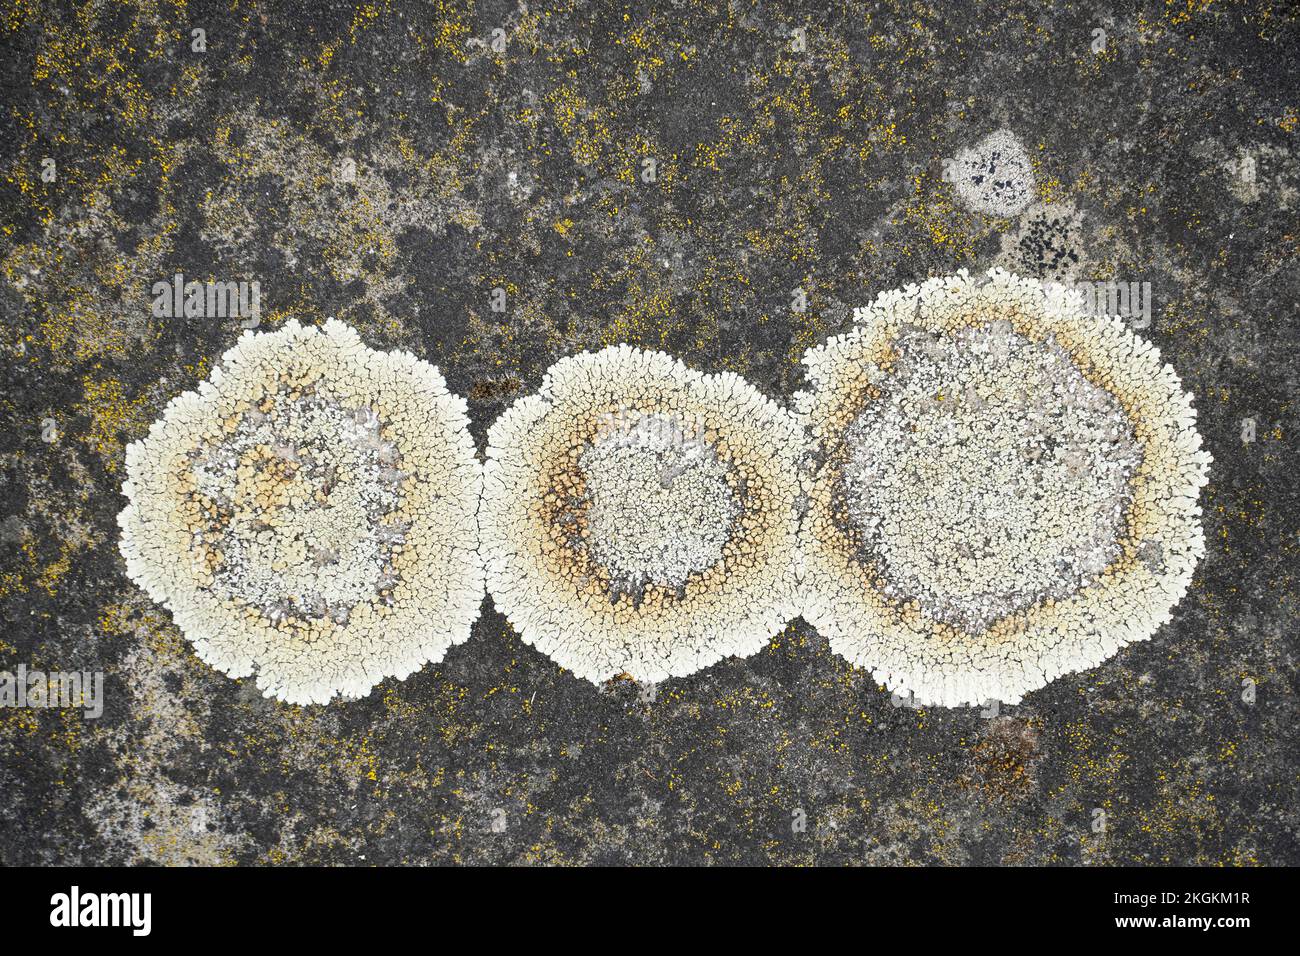 Lichen in stone background. Mushroom close-up. Stock Photo